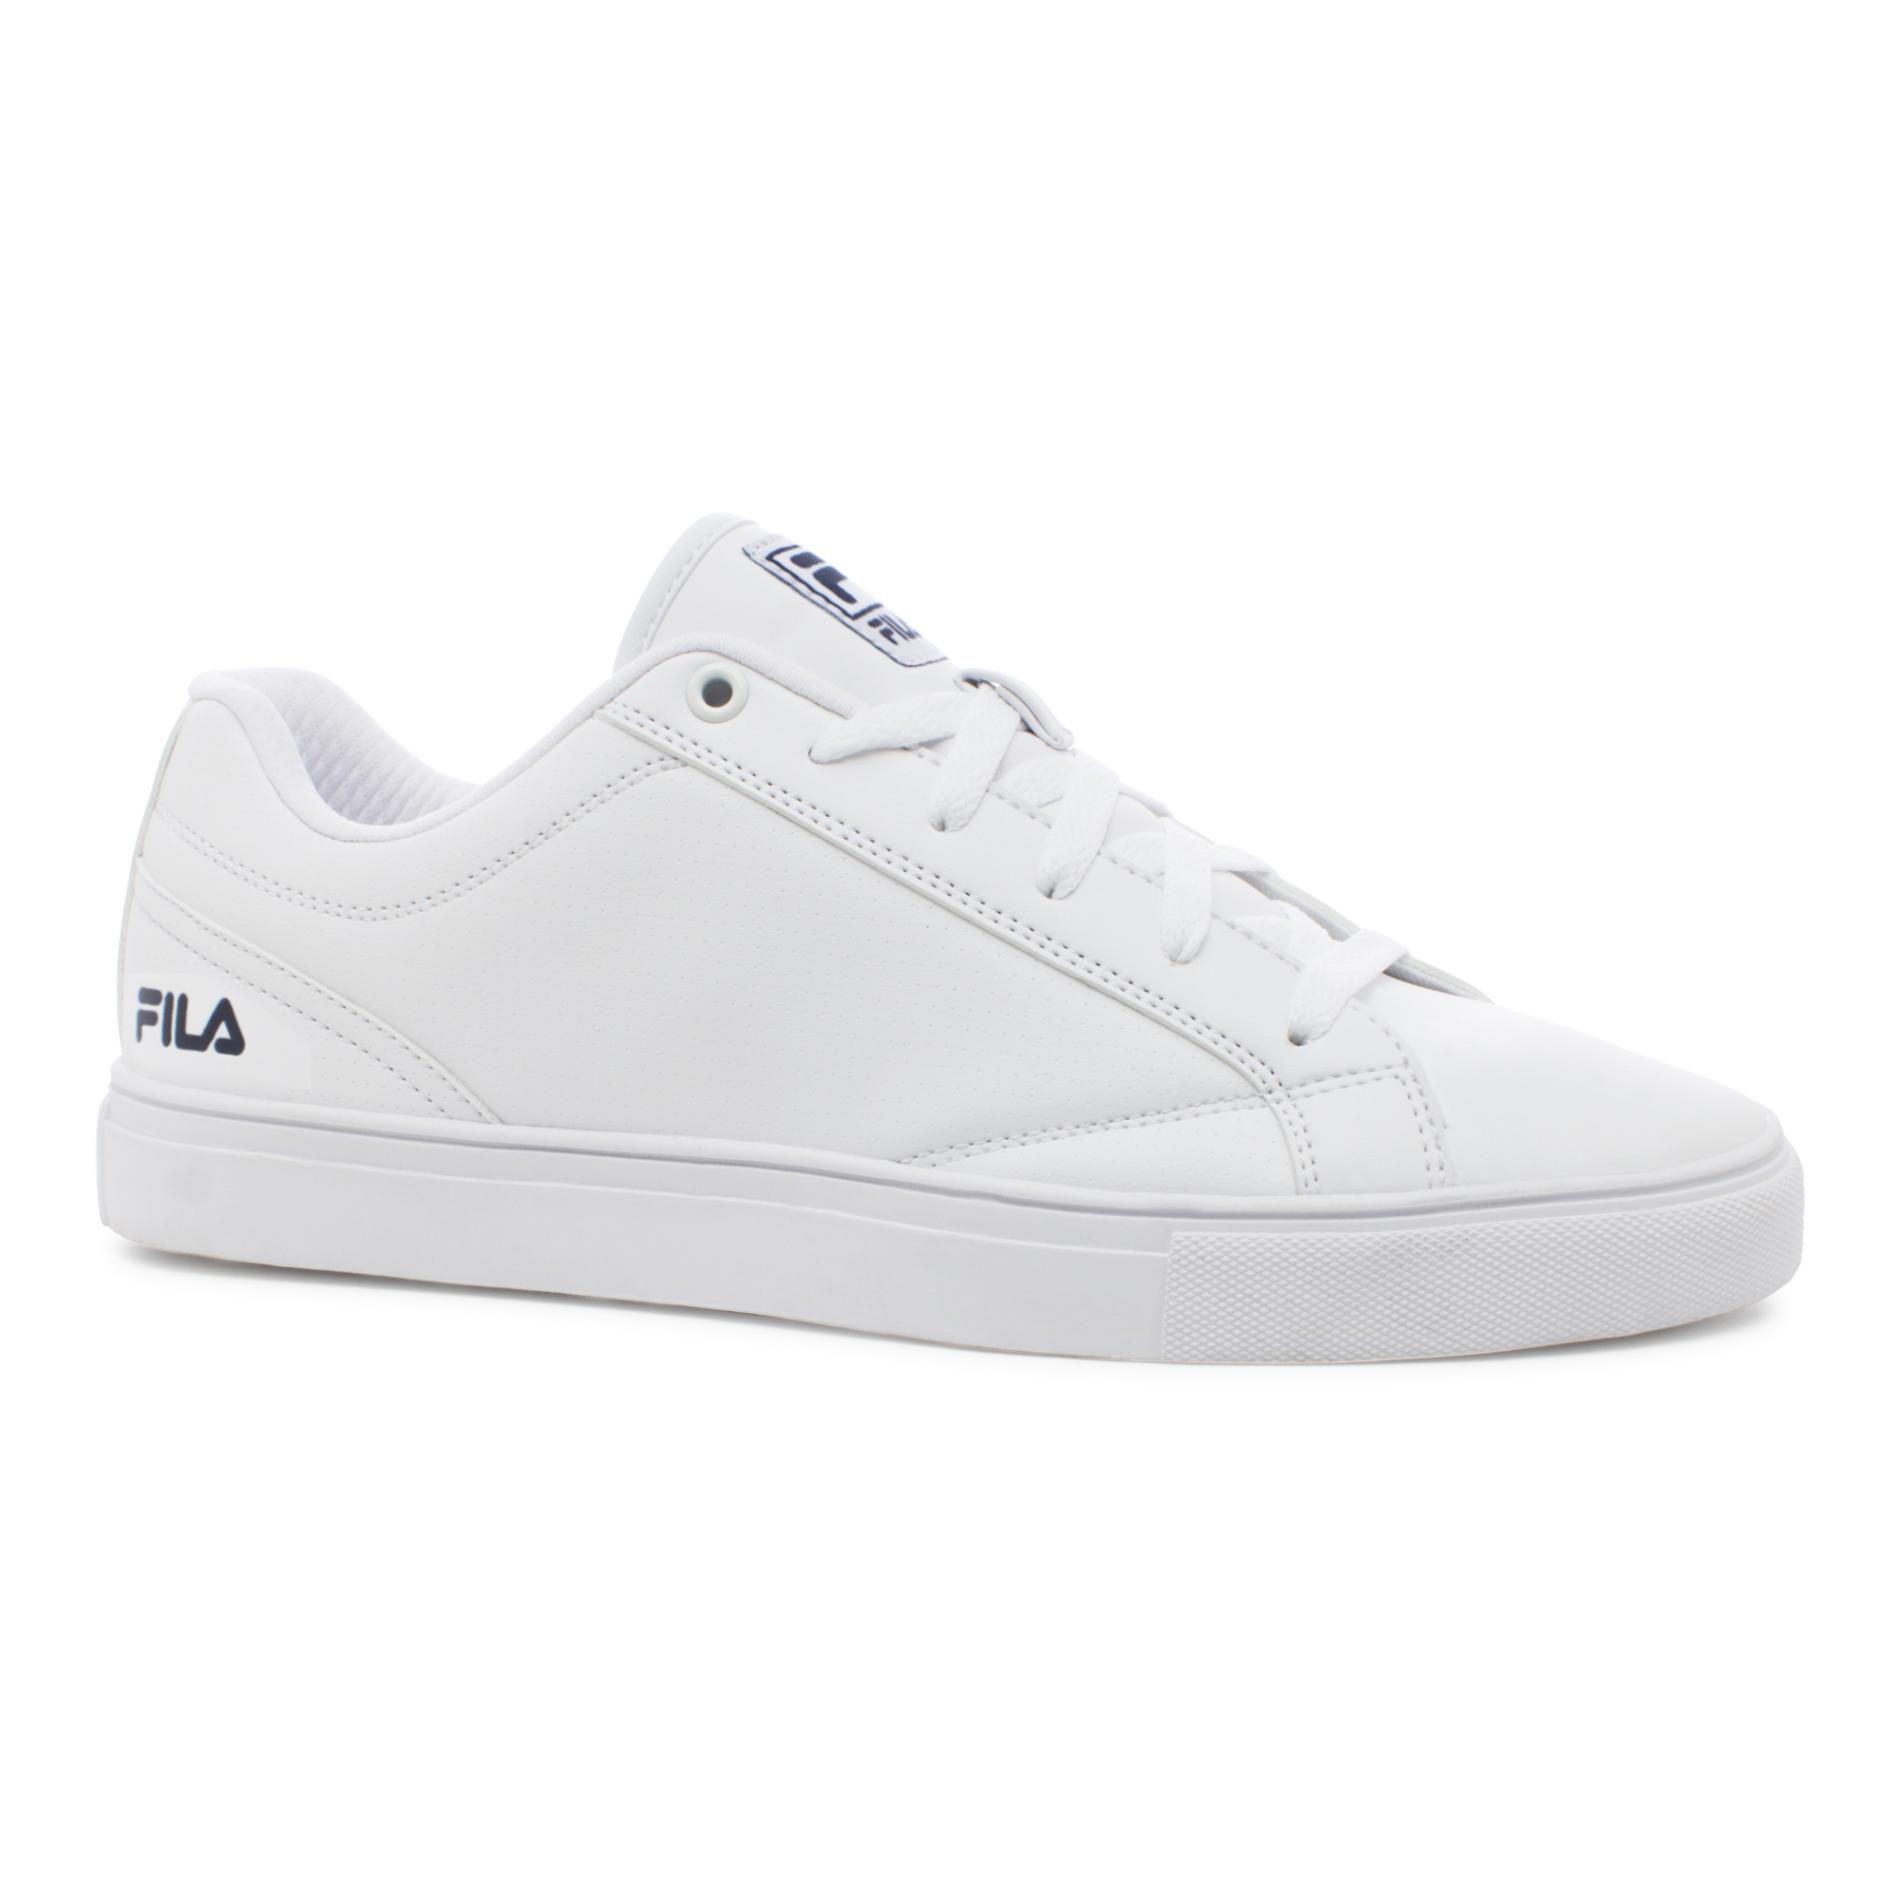 Fila Men's Amalfi Casual Sneaker - White